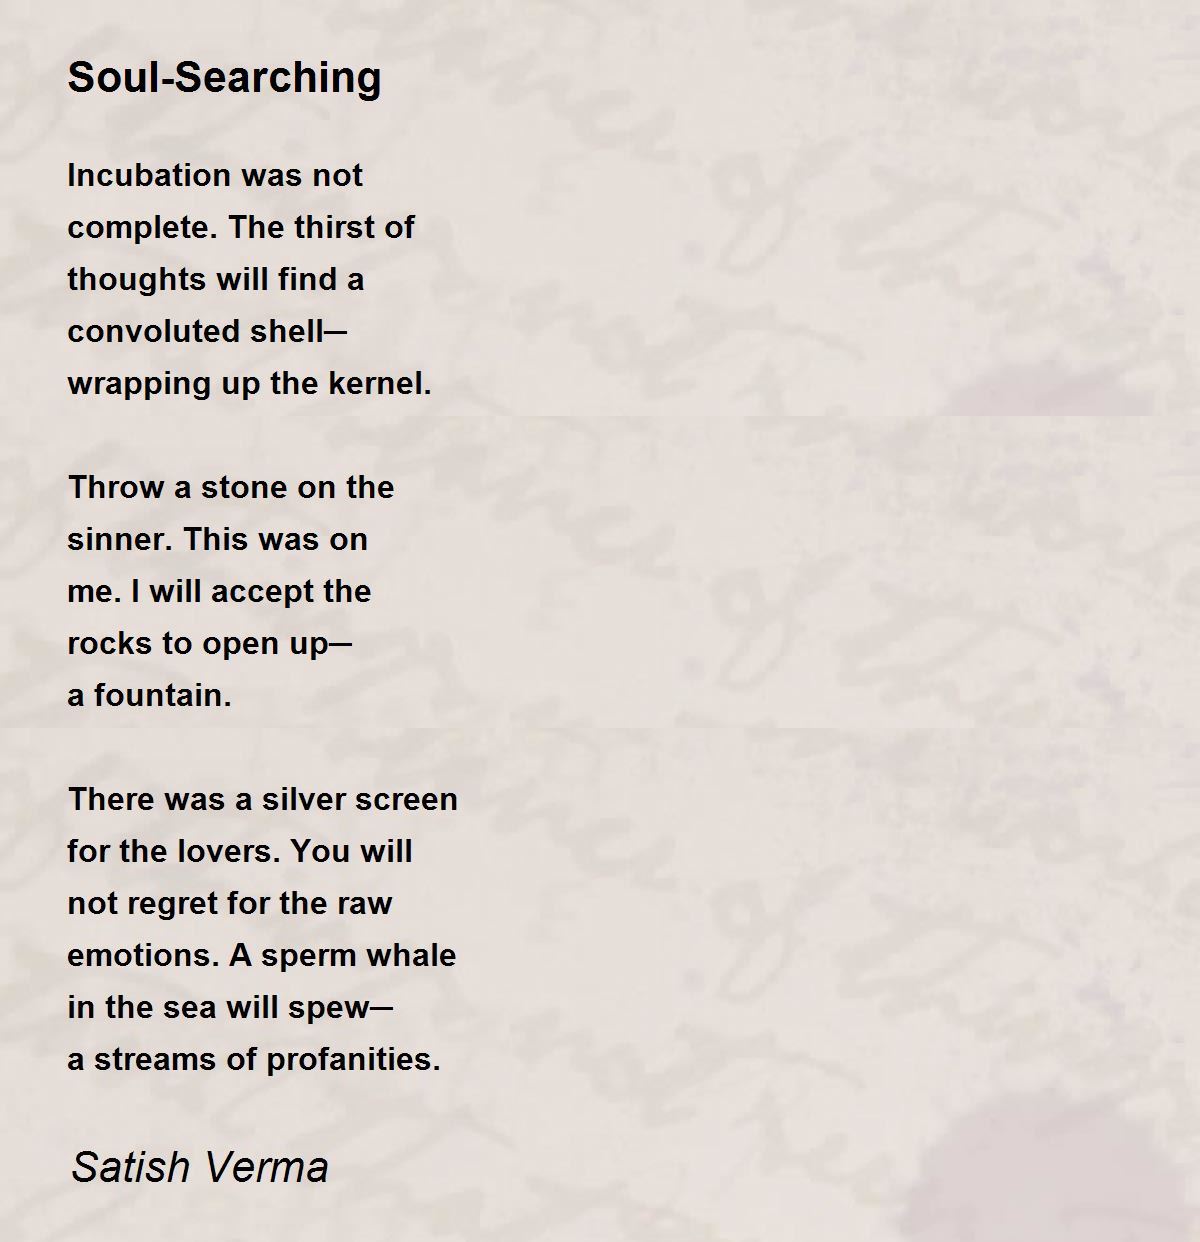 Soul-Searching - Soul-Searching Poem by Satish Verma